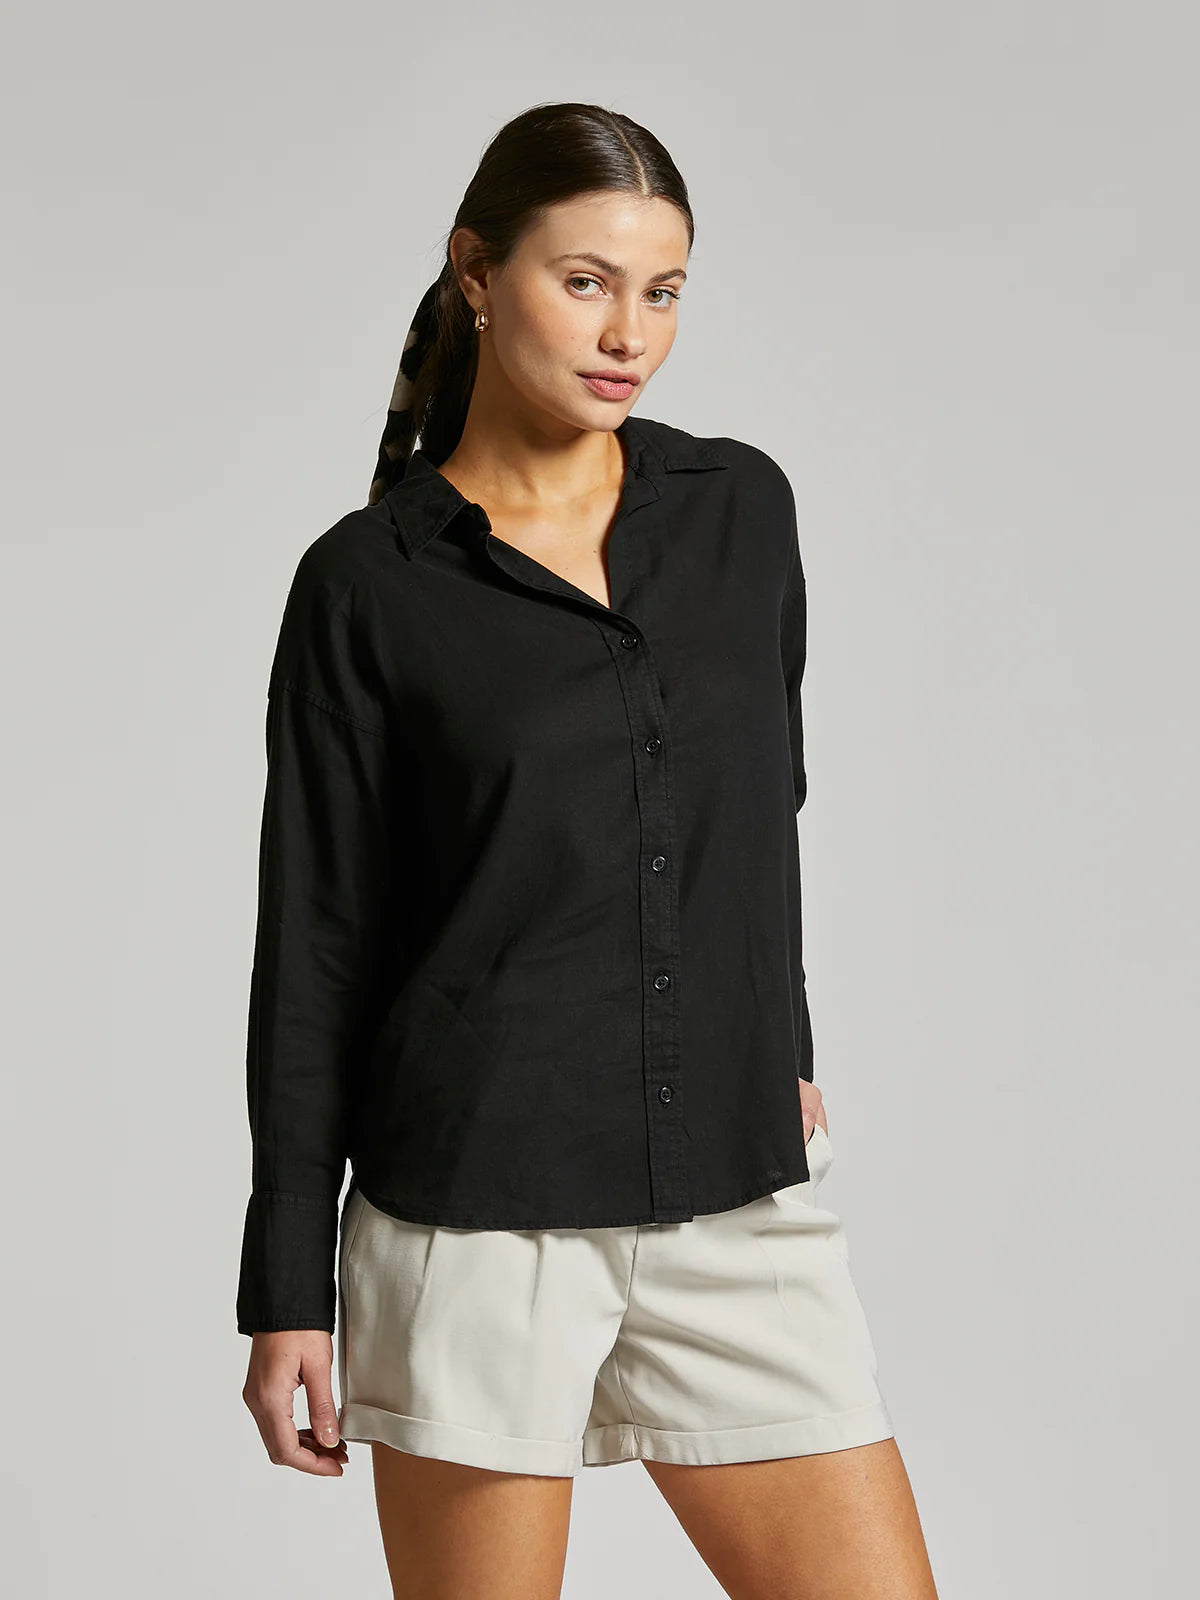 black, long sleeve linen blend button up top with collar